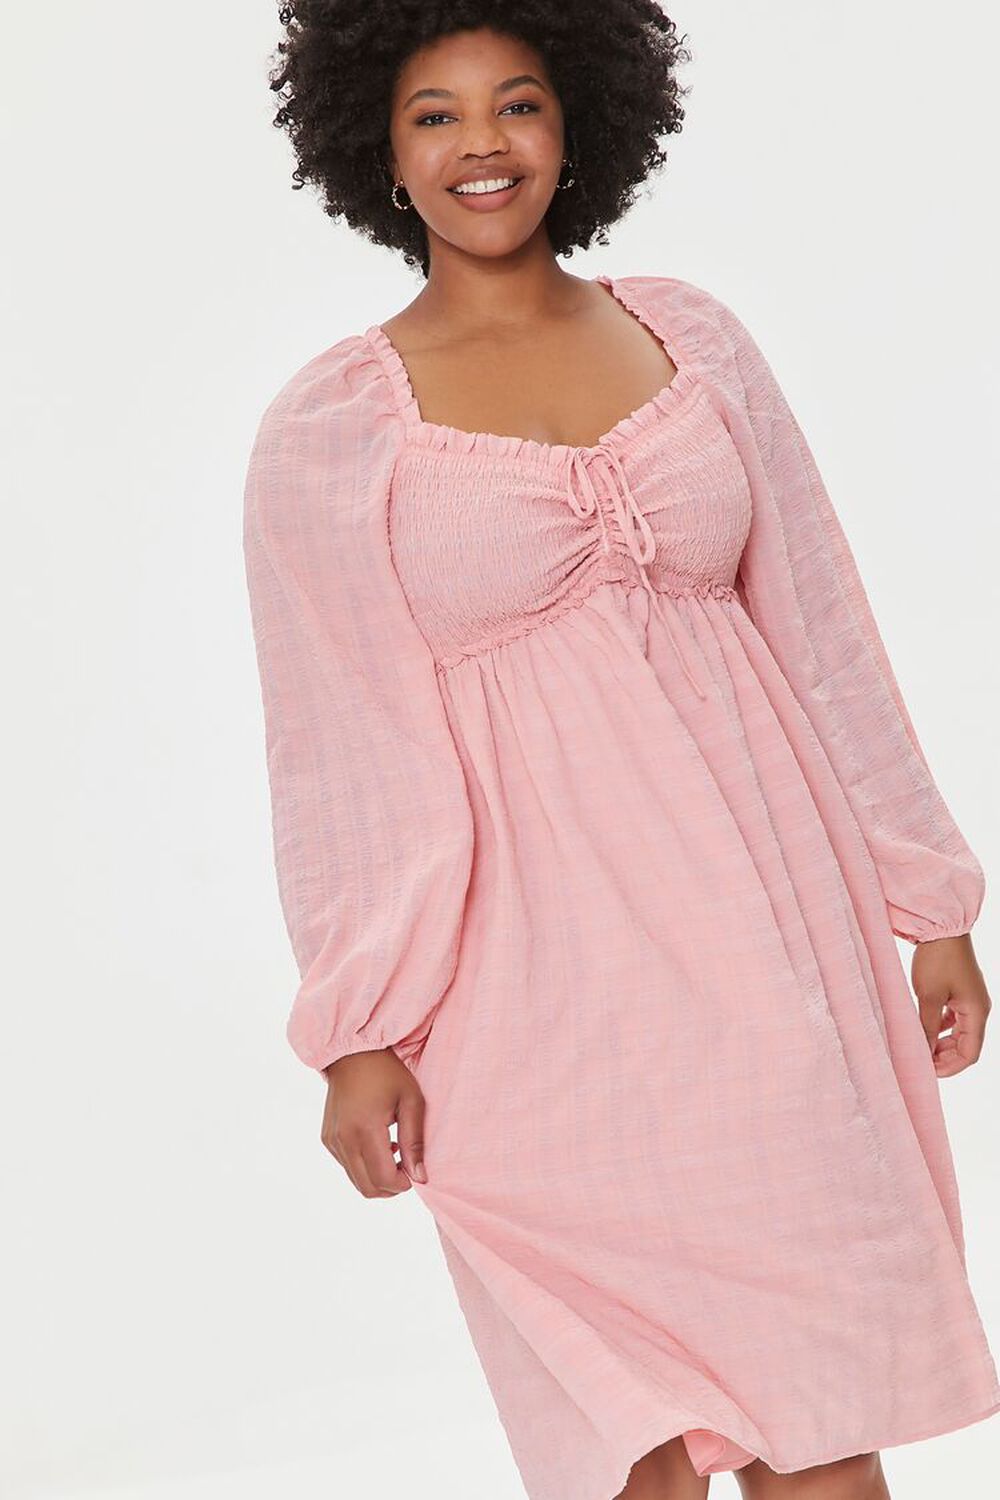 ROSE Plus Size Sweetheart Midi Dress, image 1